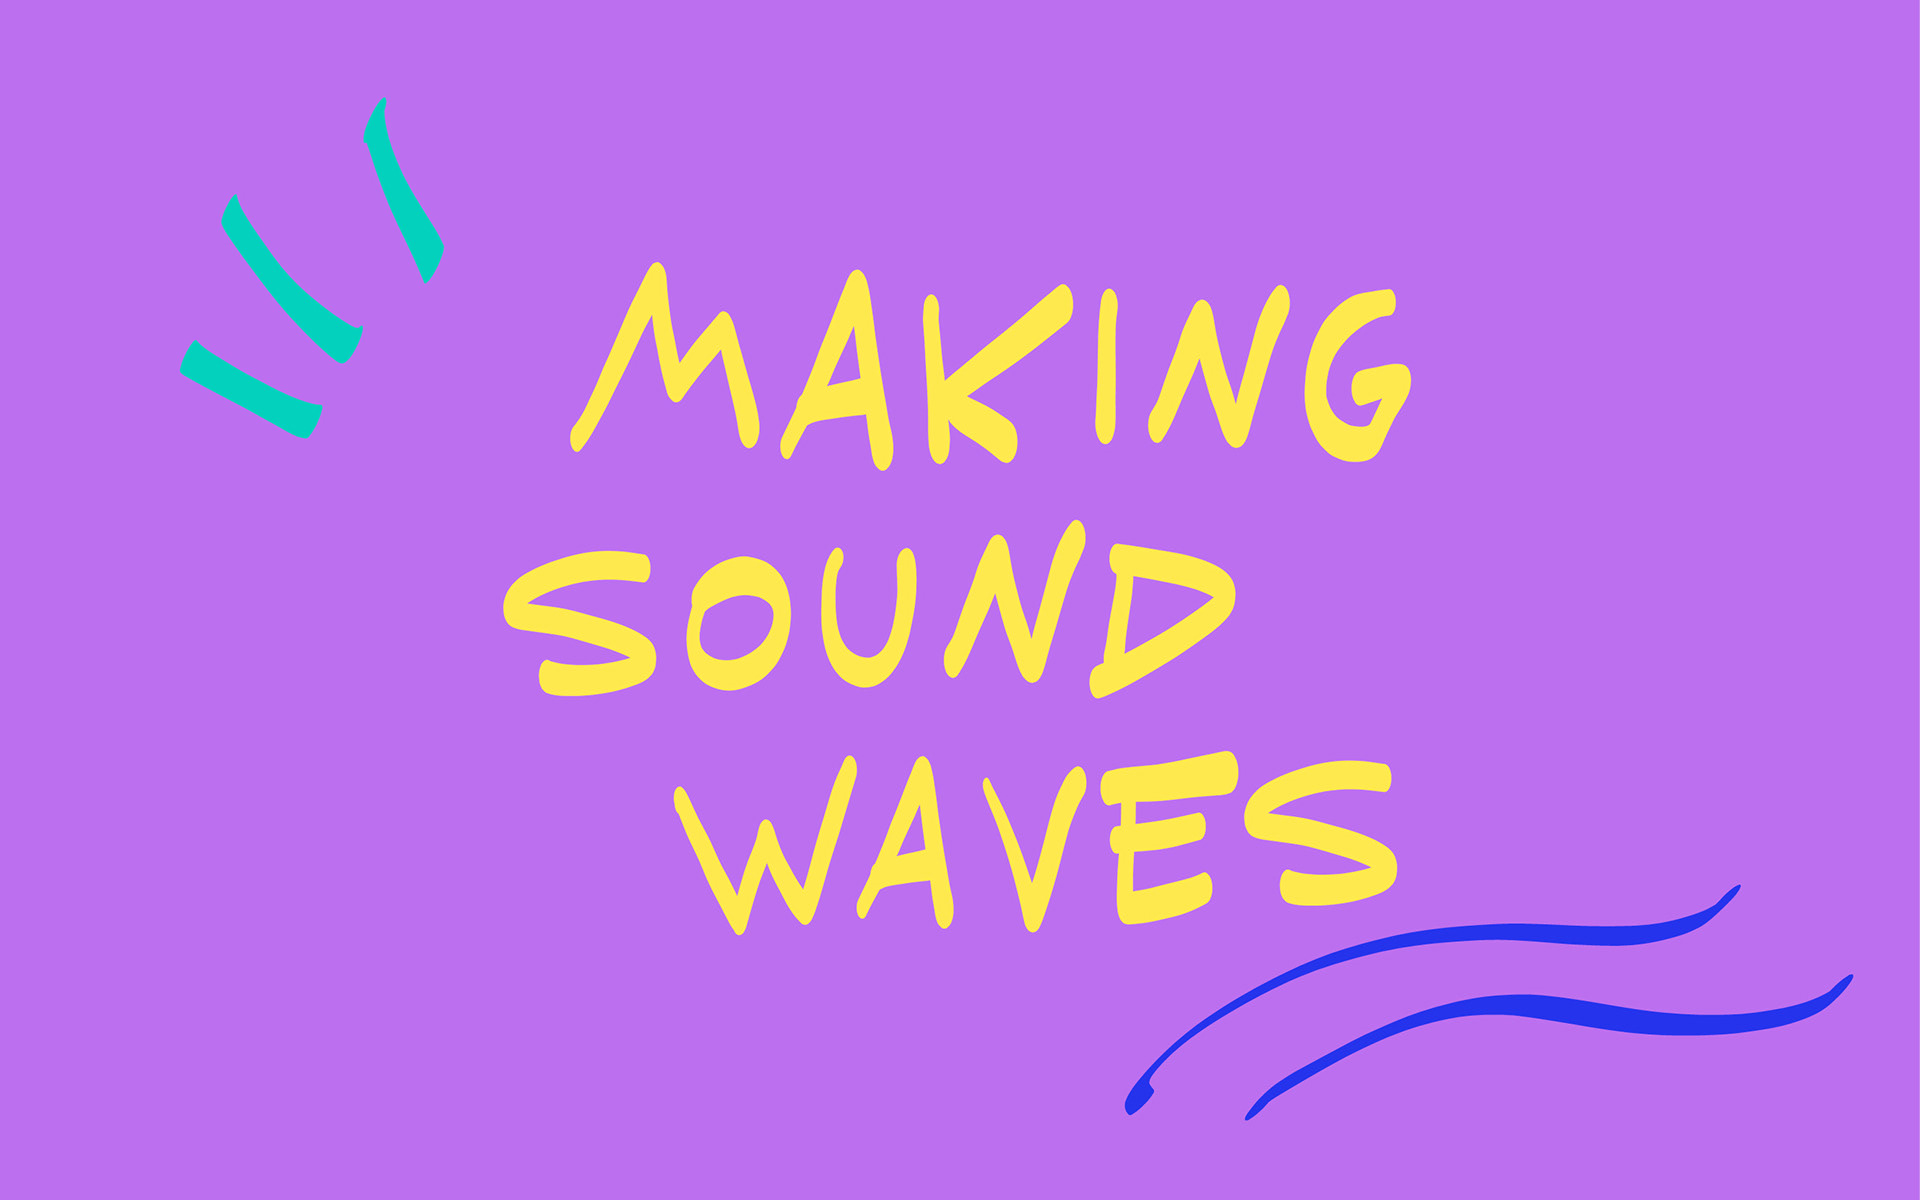 Making-sound-waves